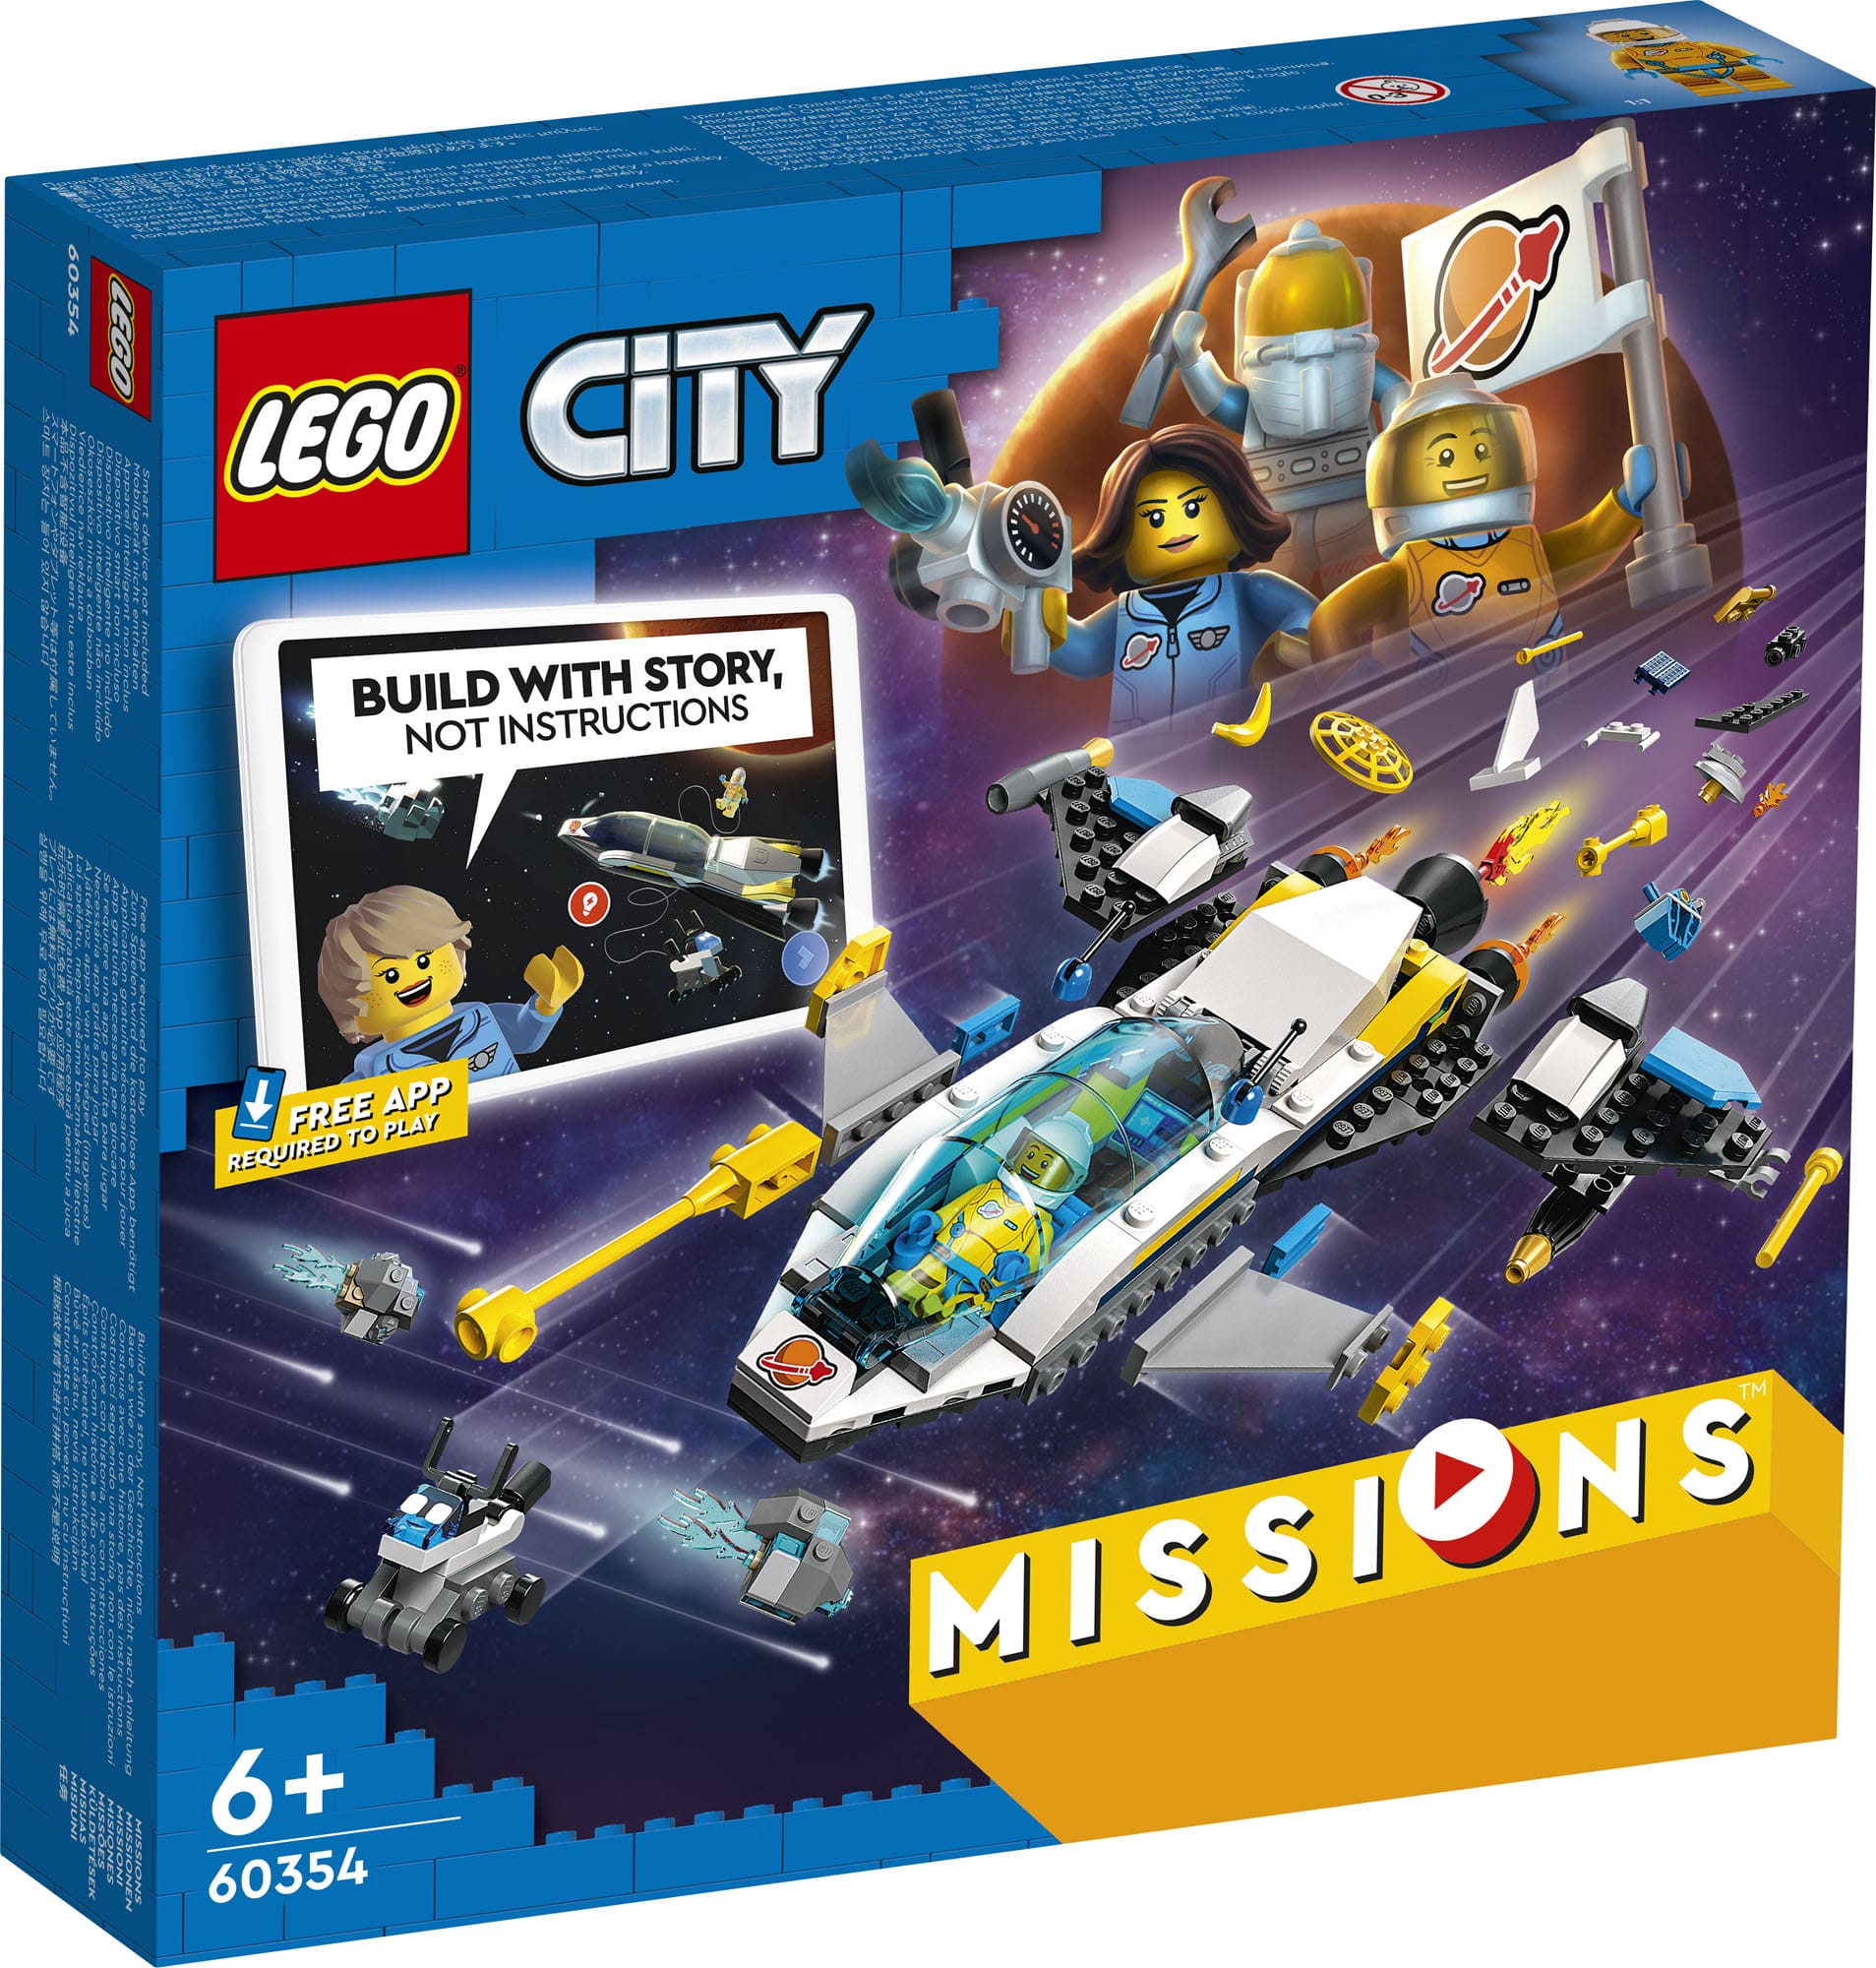 LEGO-City-Missions-60354.jpg